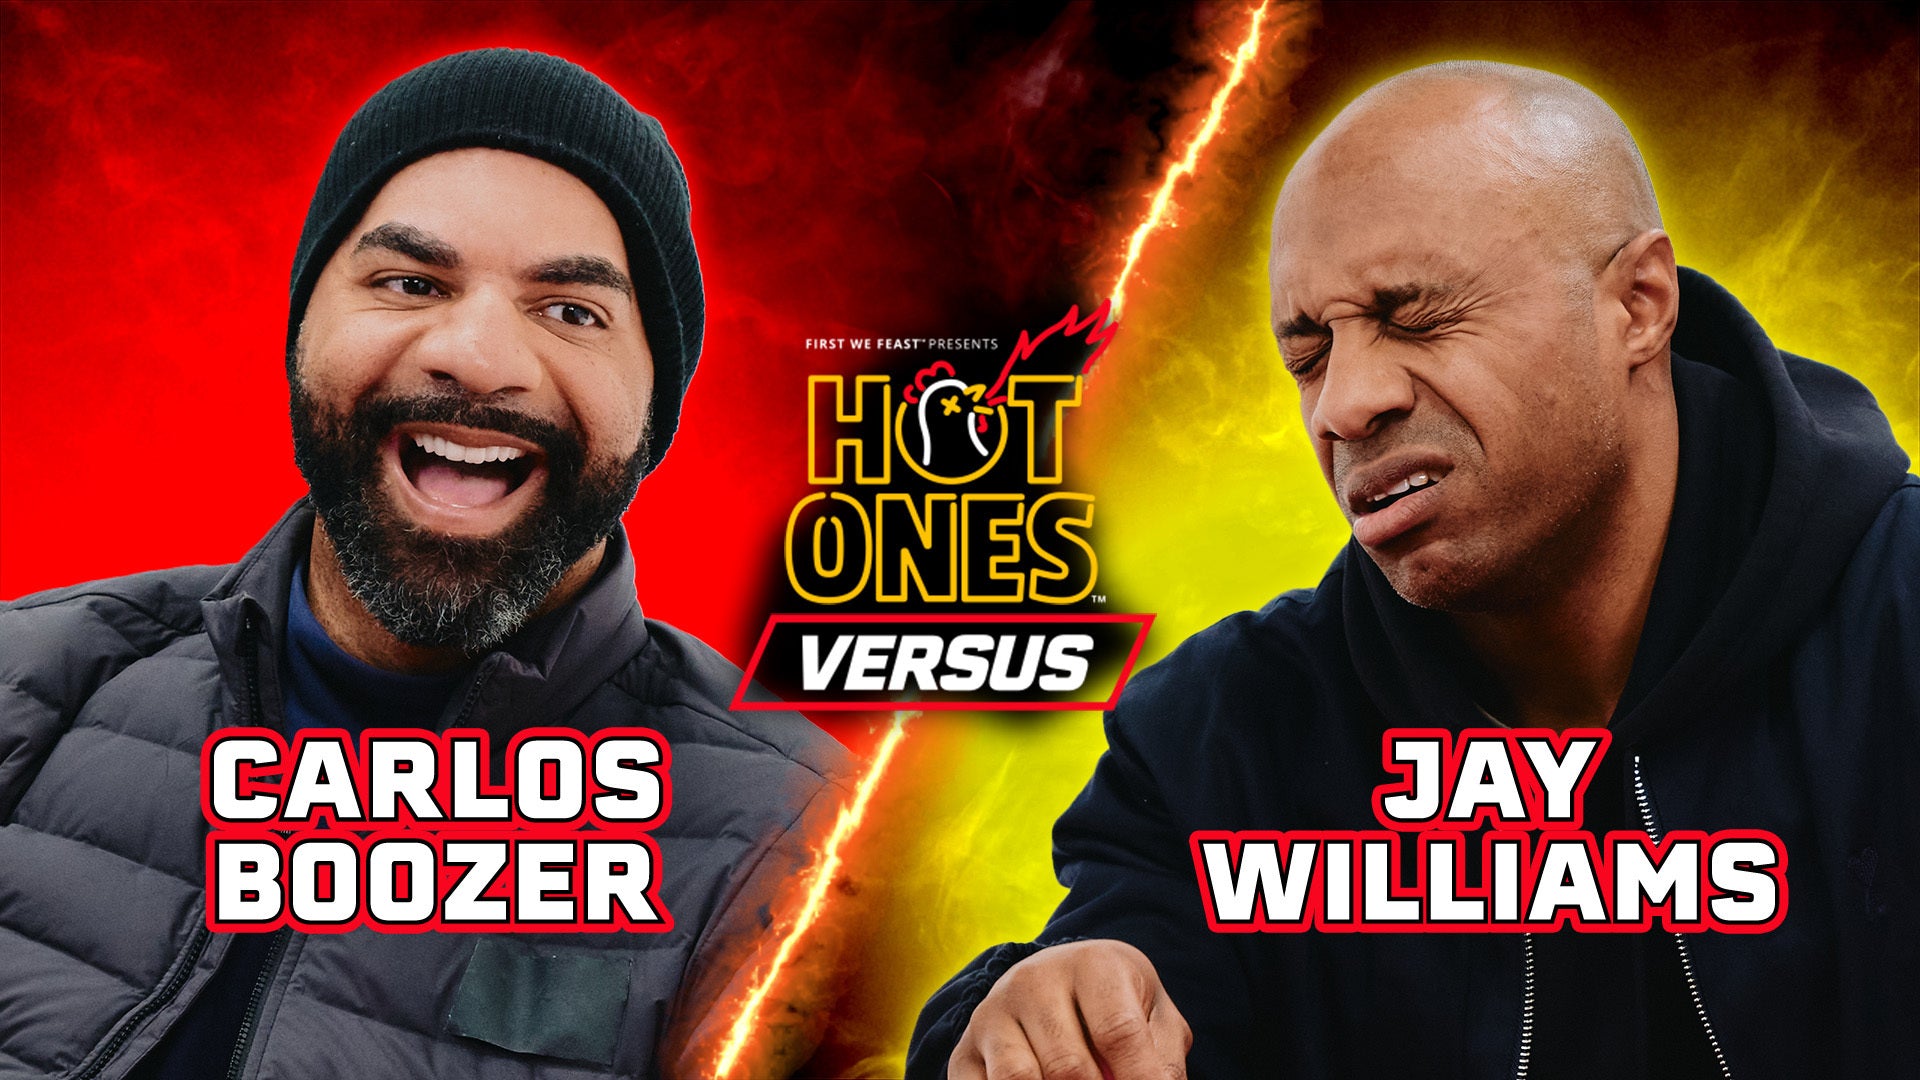 Carlos Boozer vs. Jay Williams | Hot Ones Versus